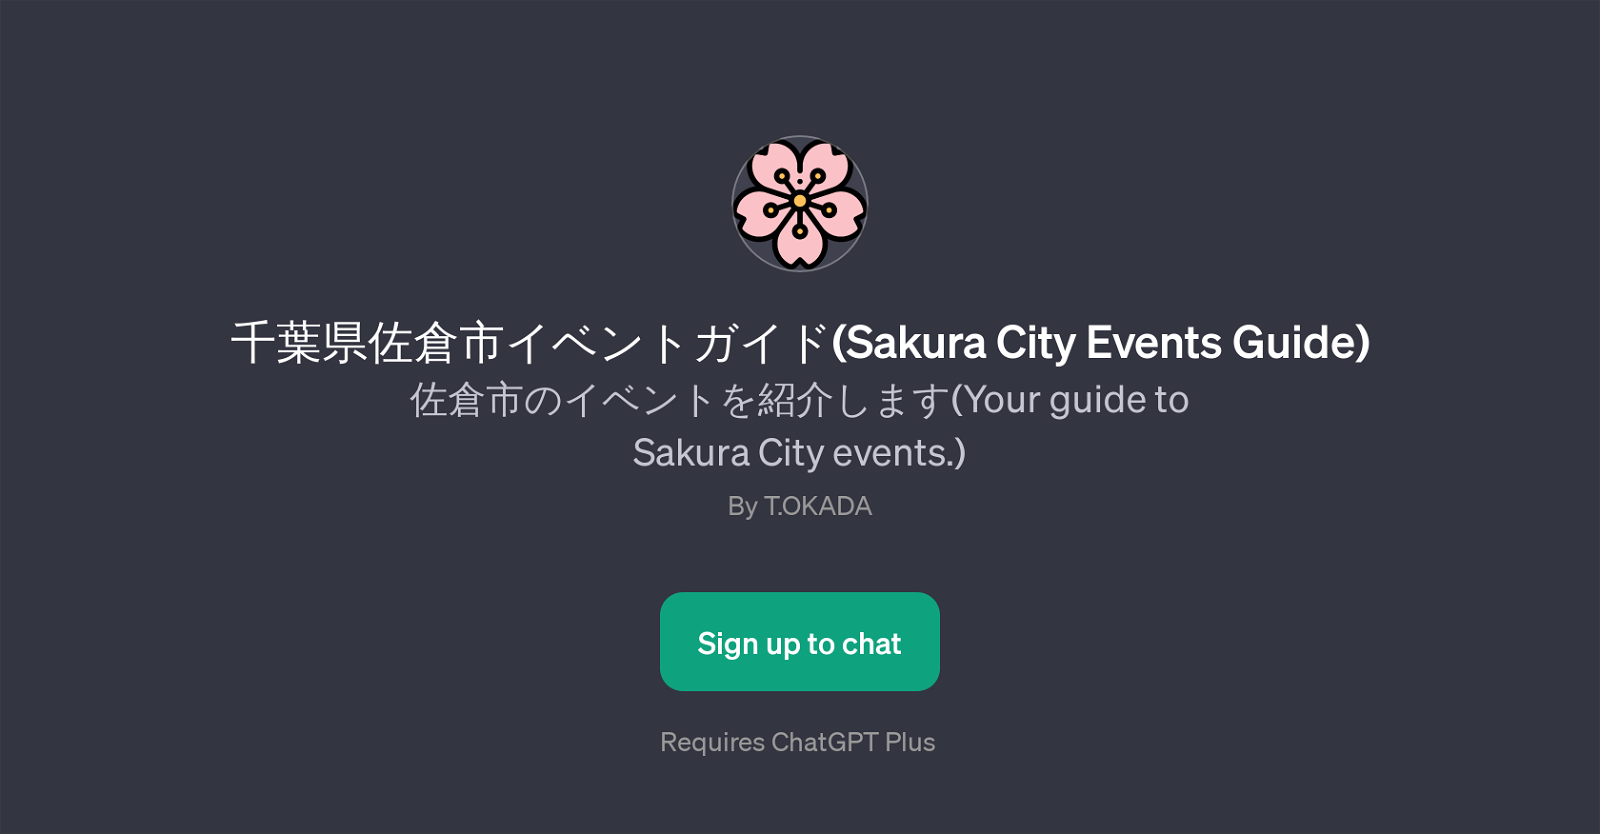 Sakura City Events Guide website